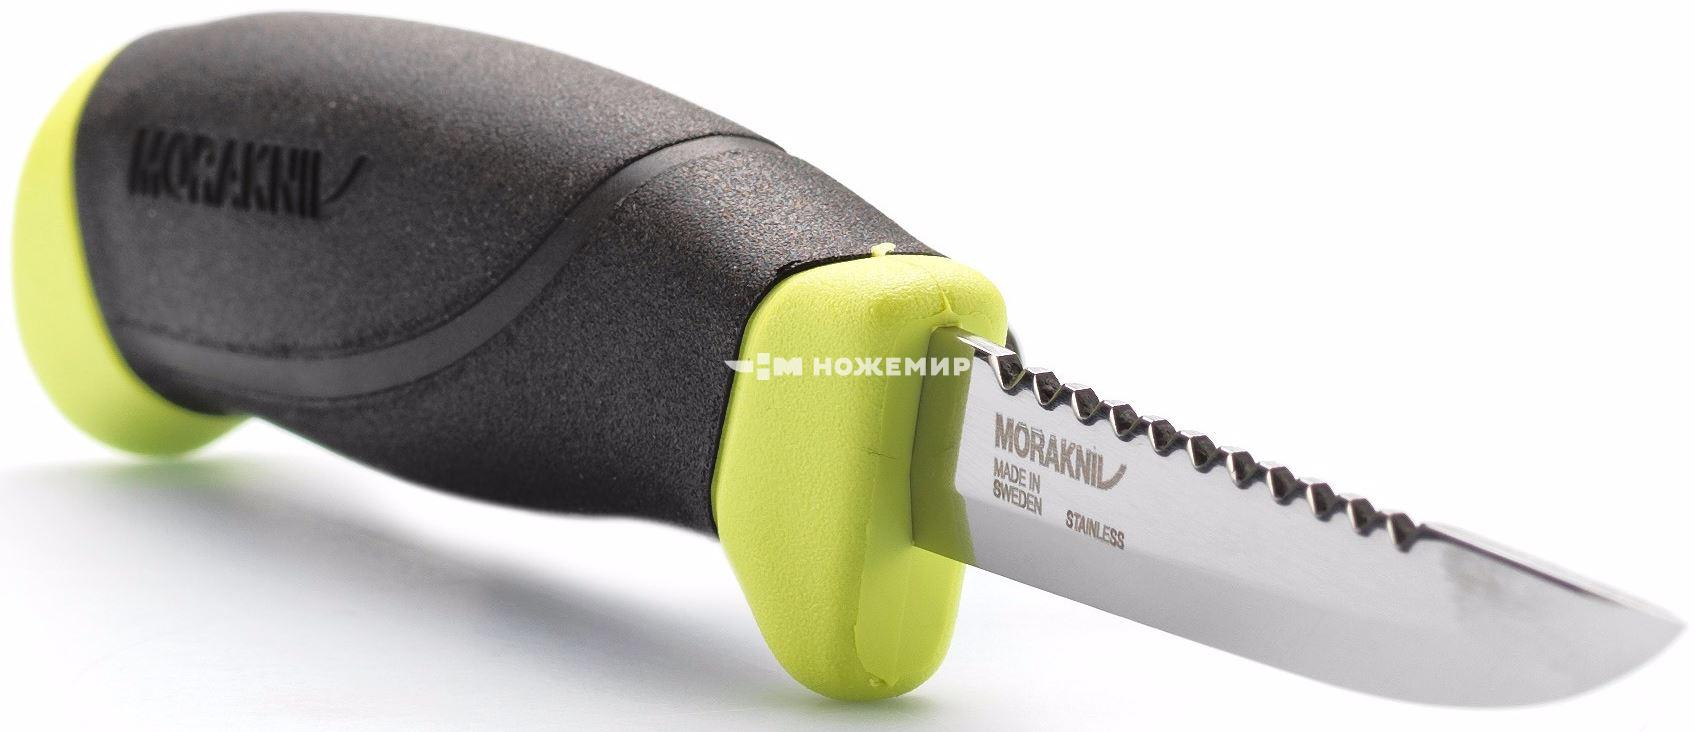 Нож Morakniv Fishing Comfort Scaler 098 Mora-12208